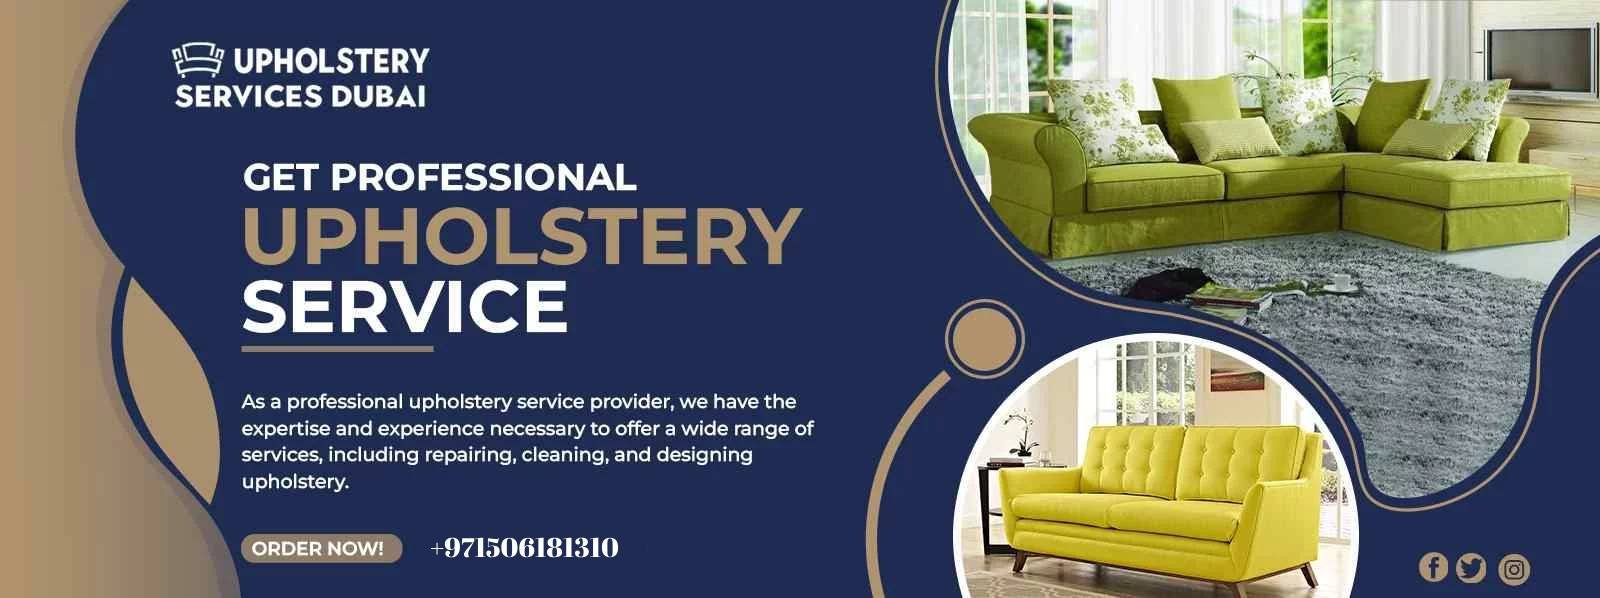 upholstery service in dubai 1